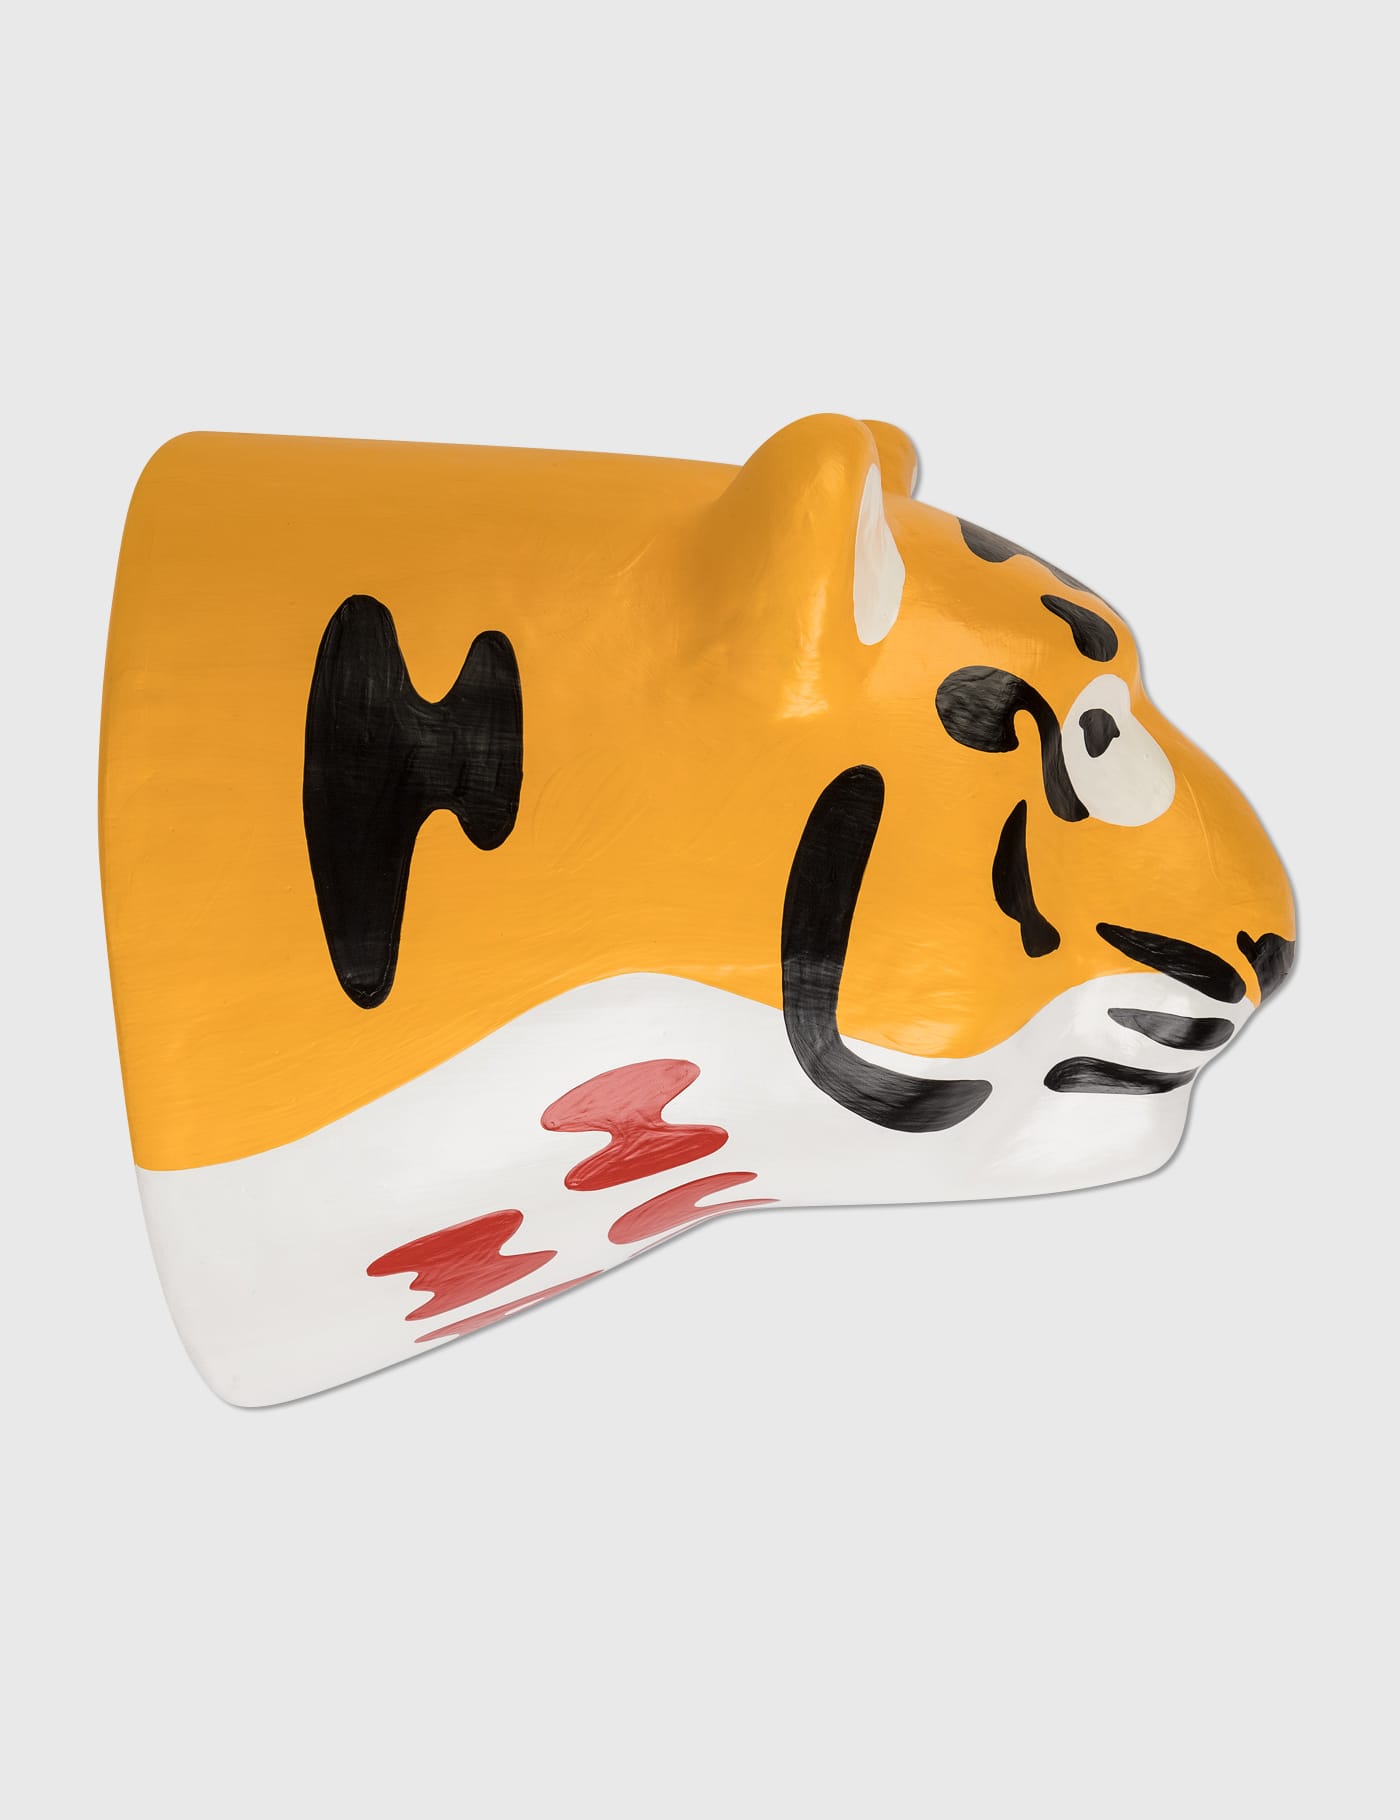 Human Made - Tiger Trophy Paper Mache Display | HBX - Globally